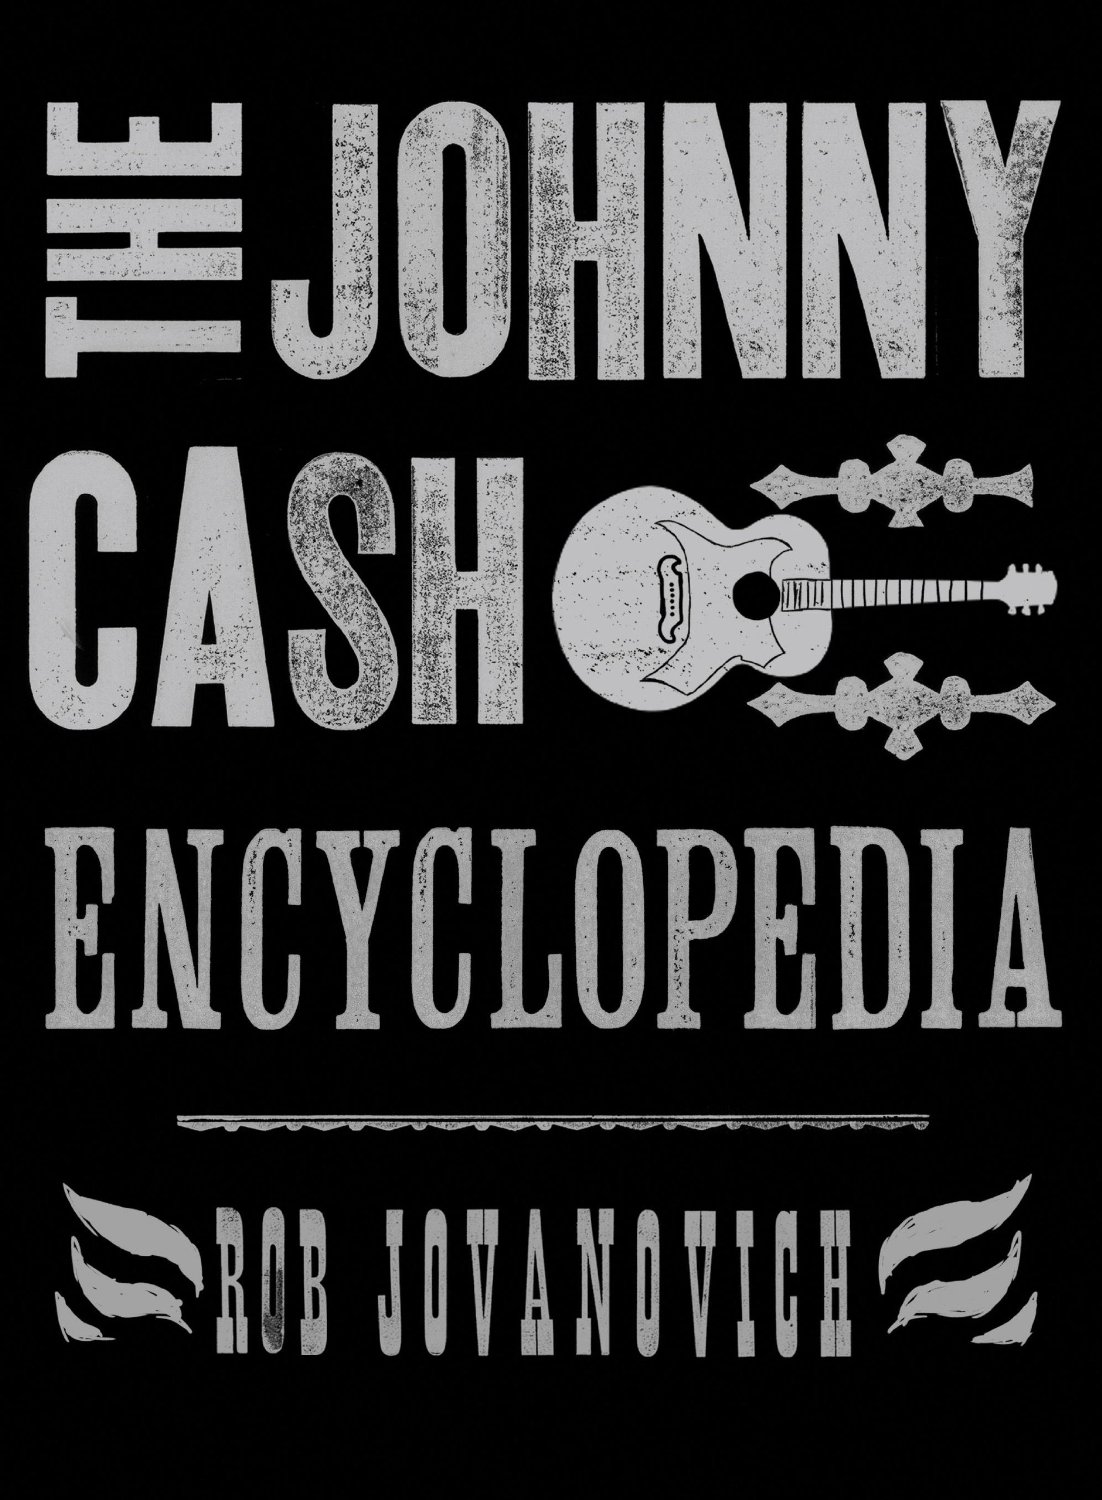 The Johnny Cash Encyclopedia